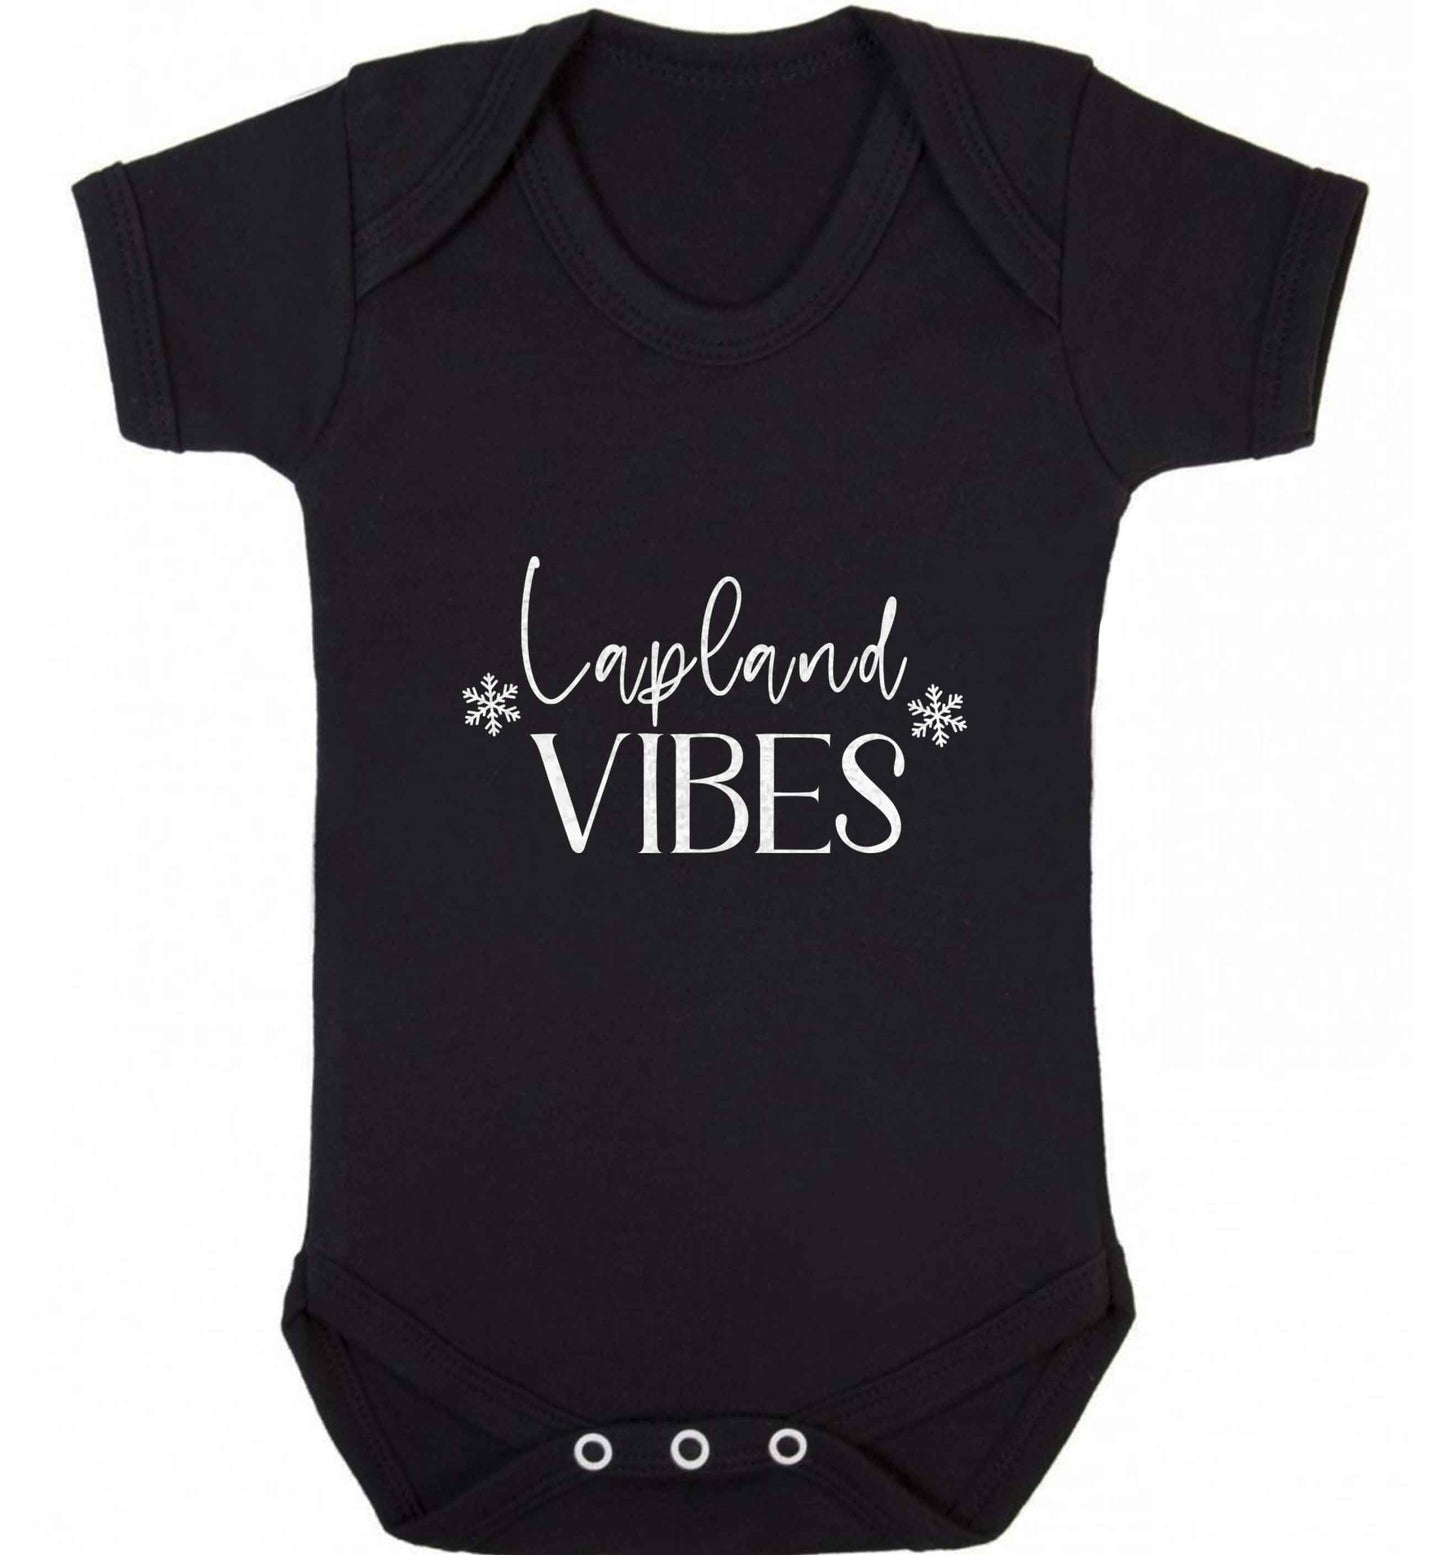 Lapland vibes baby vest black 18-24 months